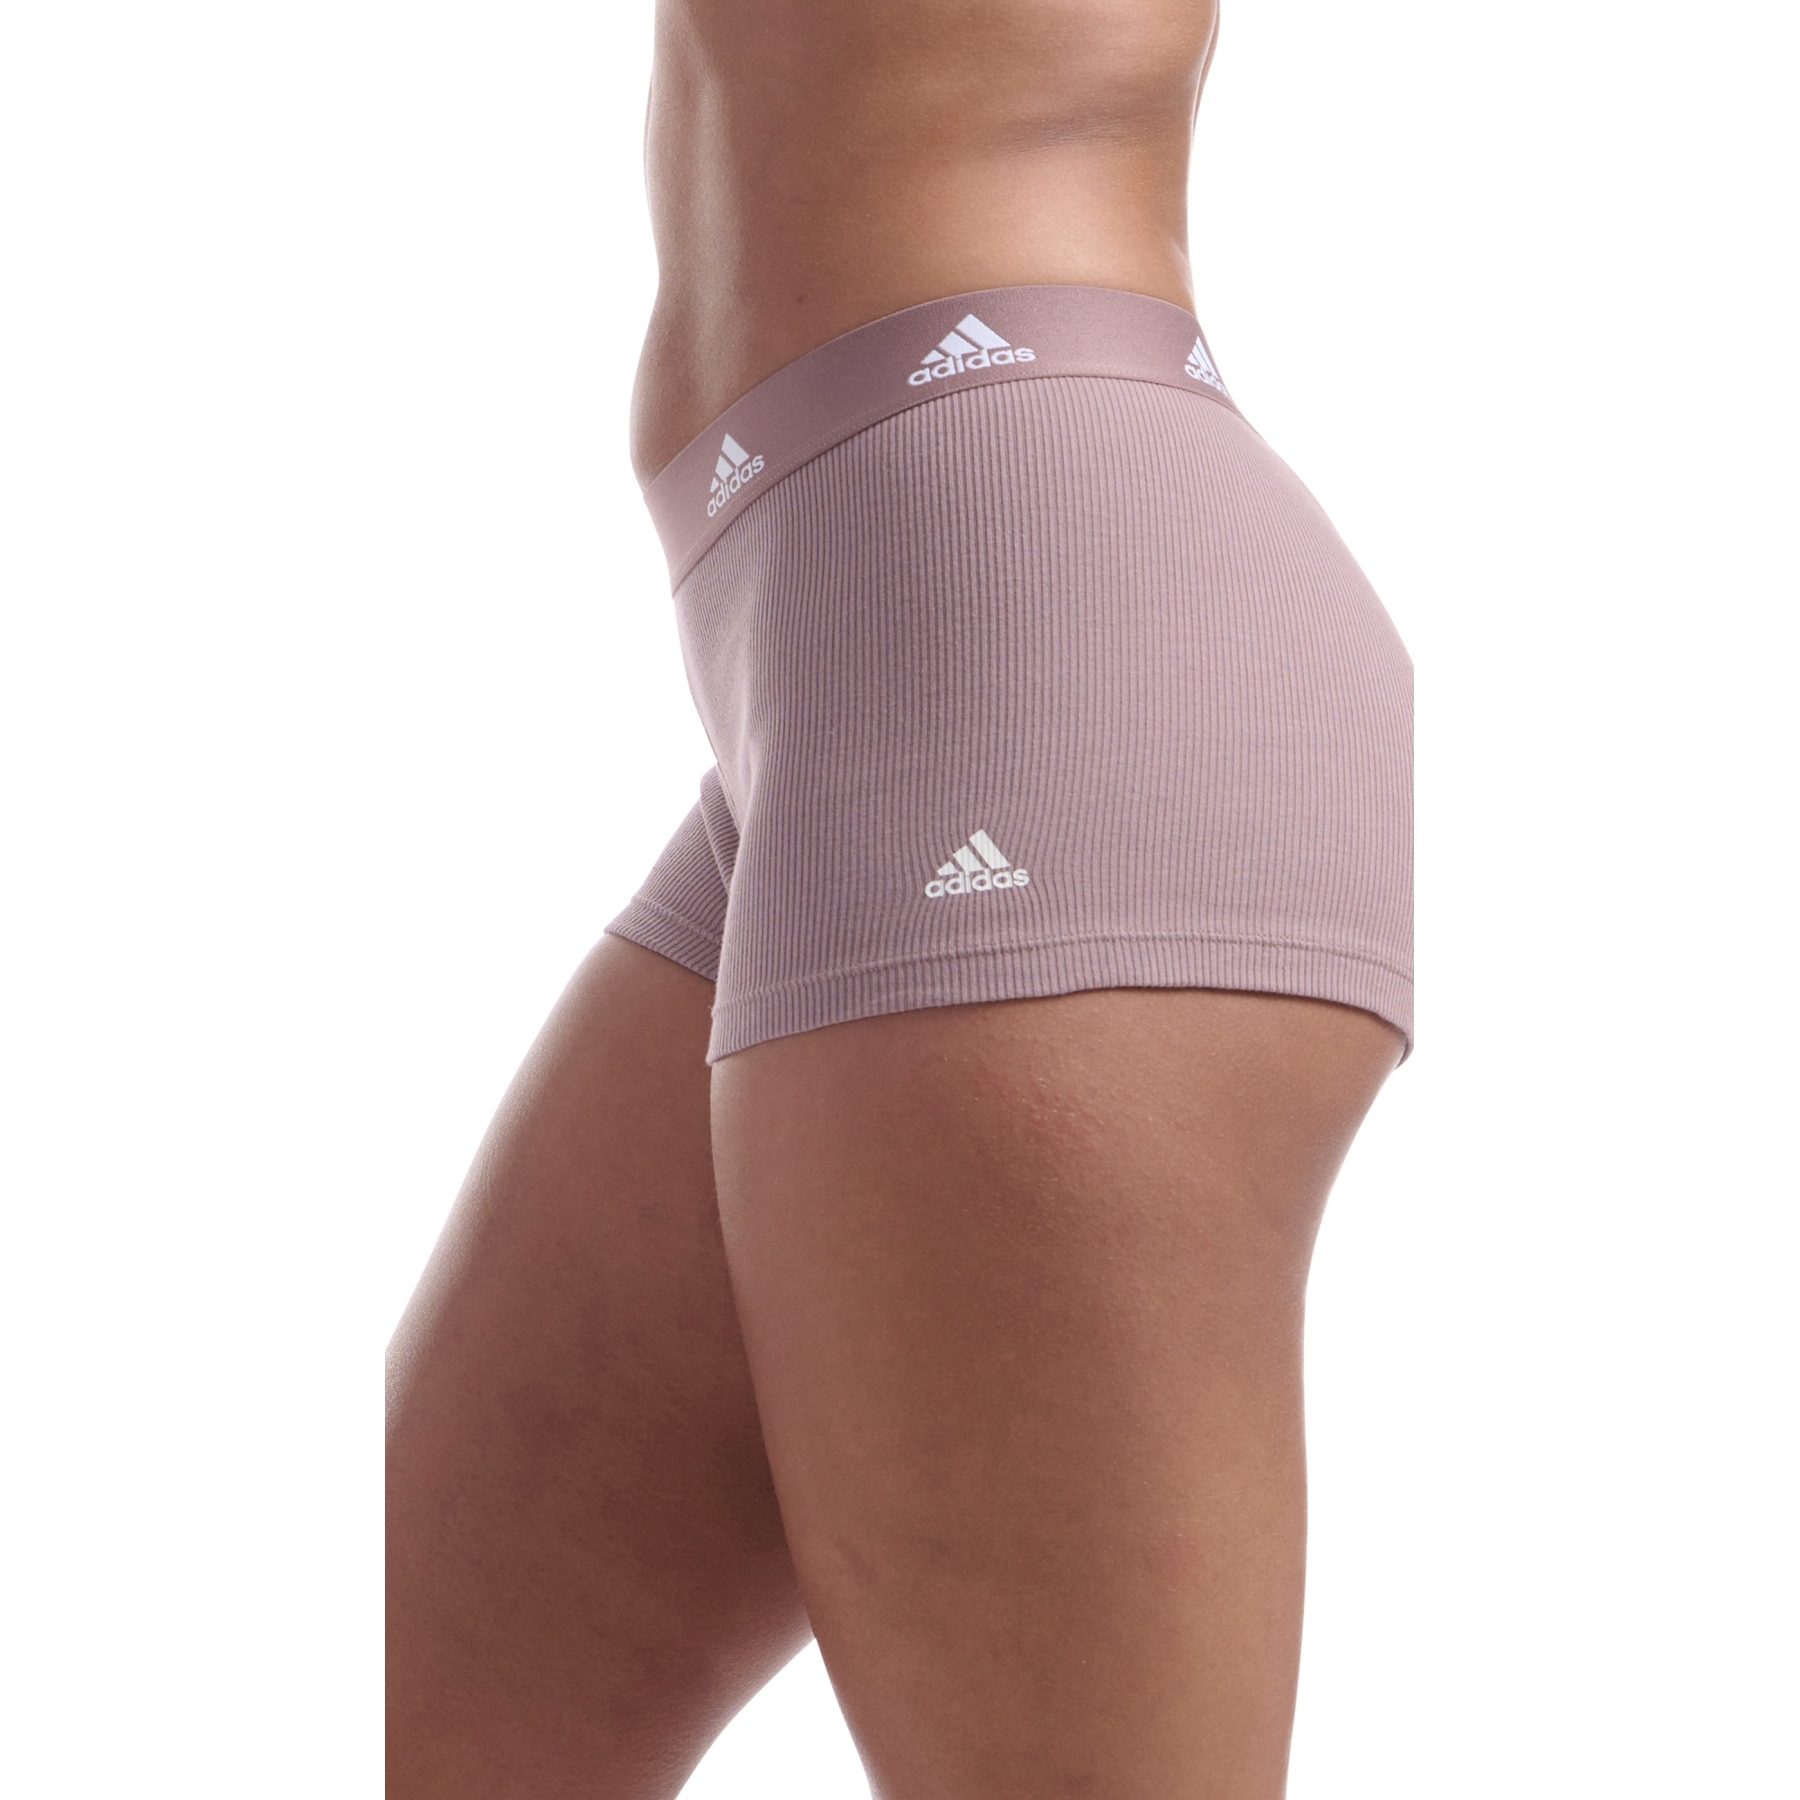 https://images.bike24.com/i/mb/48/68/12/adidas-sports-underwear-rib-2x2-cotton-womens-boxer-shorts-523-wonder-clay-4-1542050.jpg